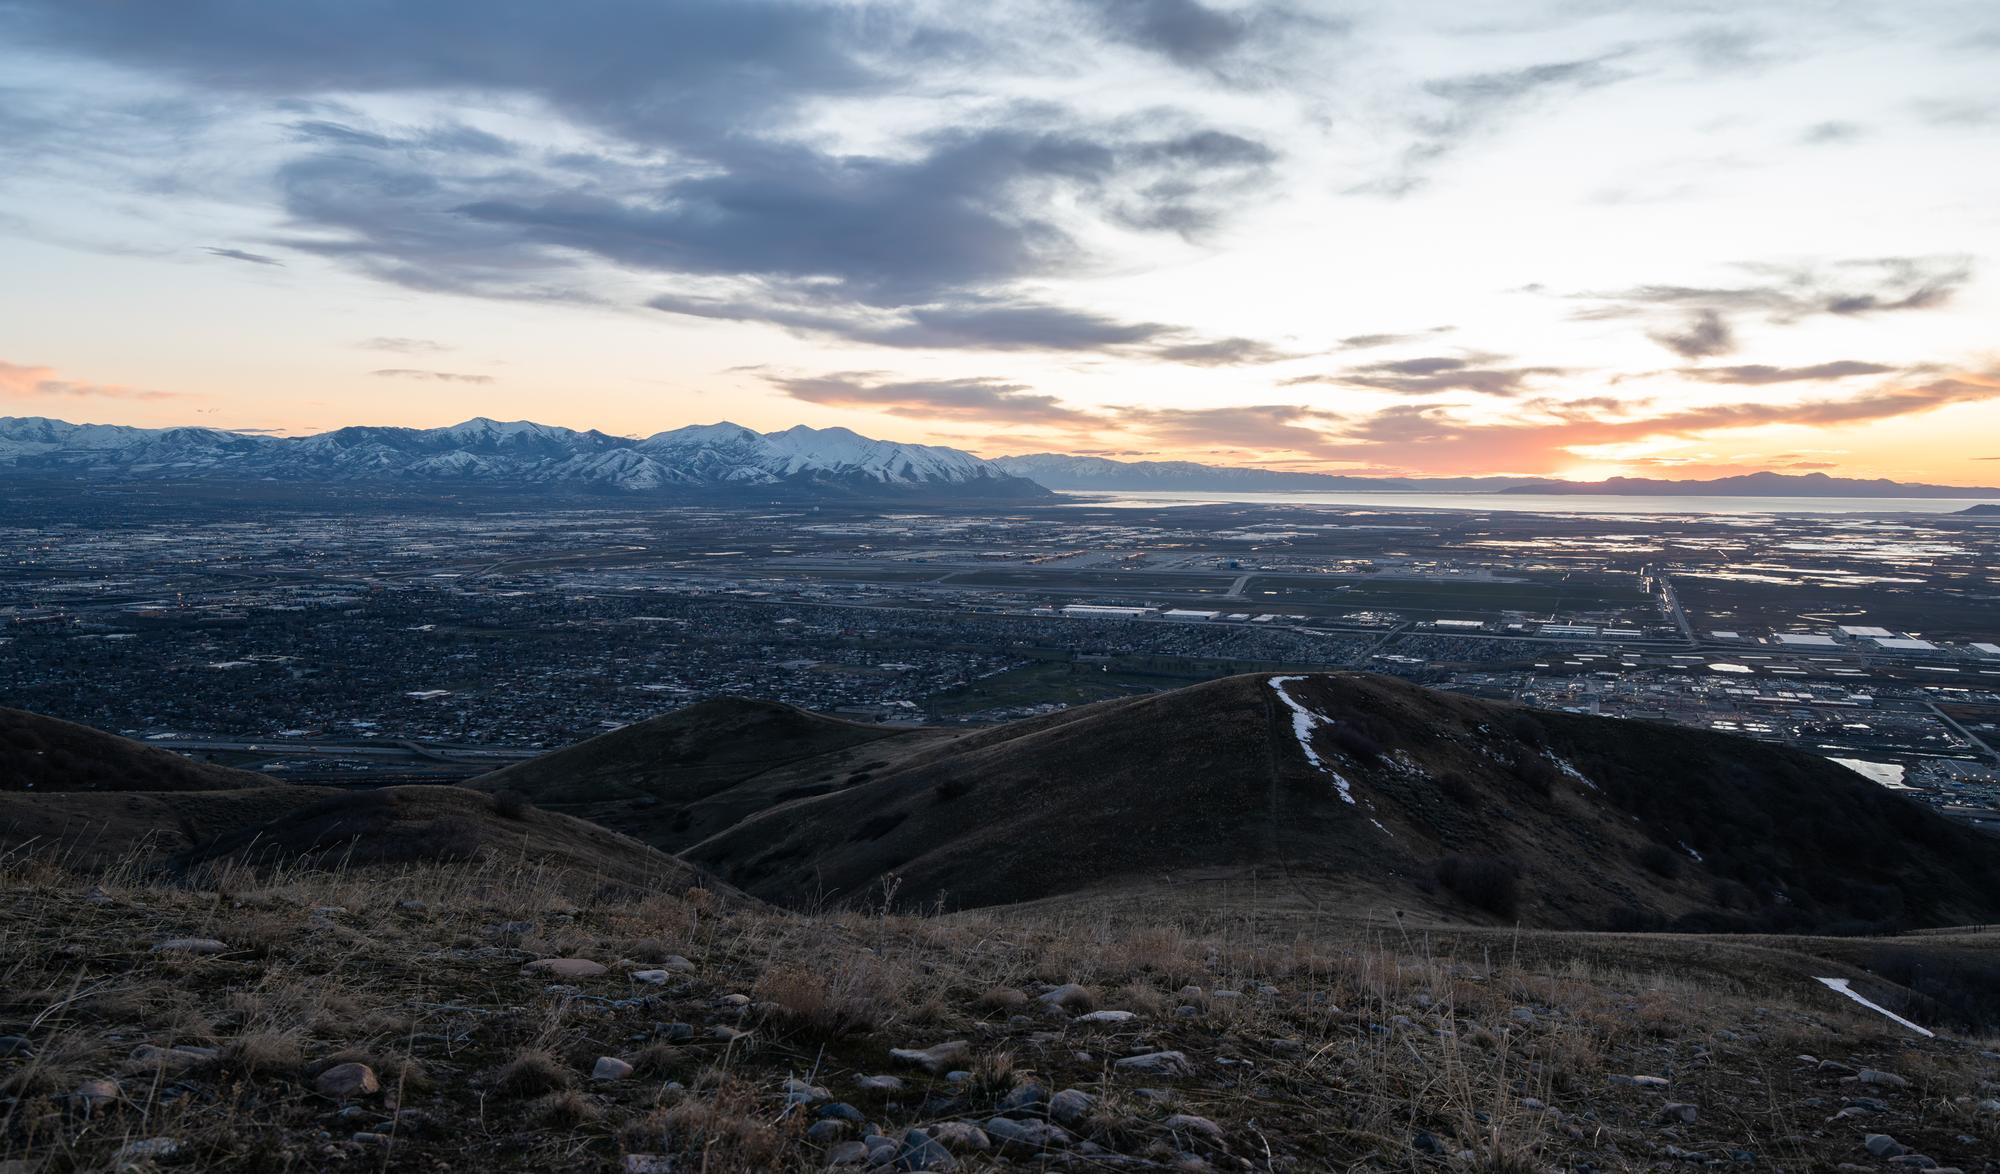 View of Great Salt Lake from Merdian Peak Trail.